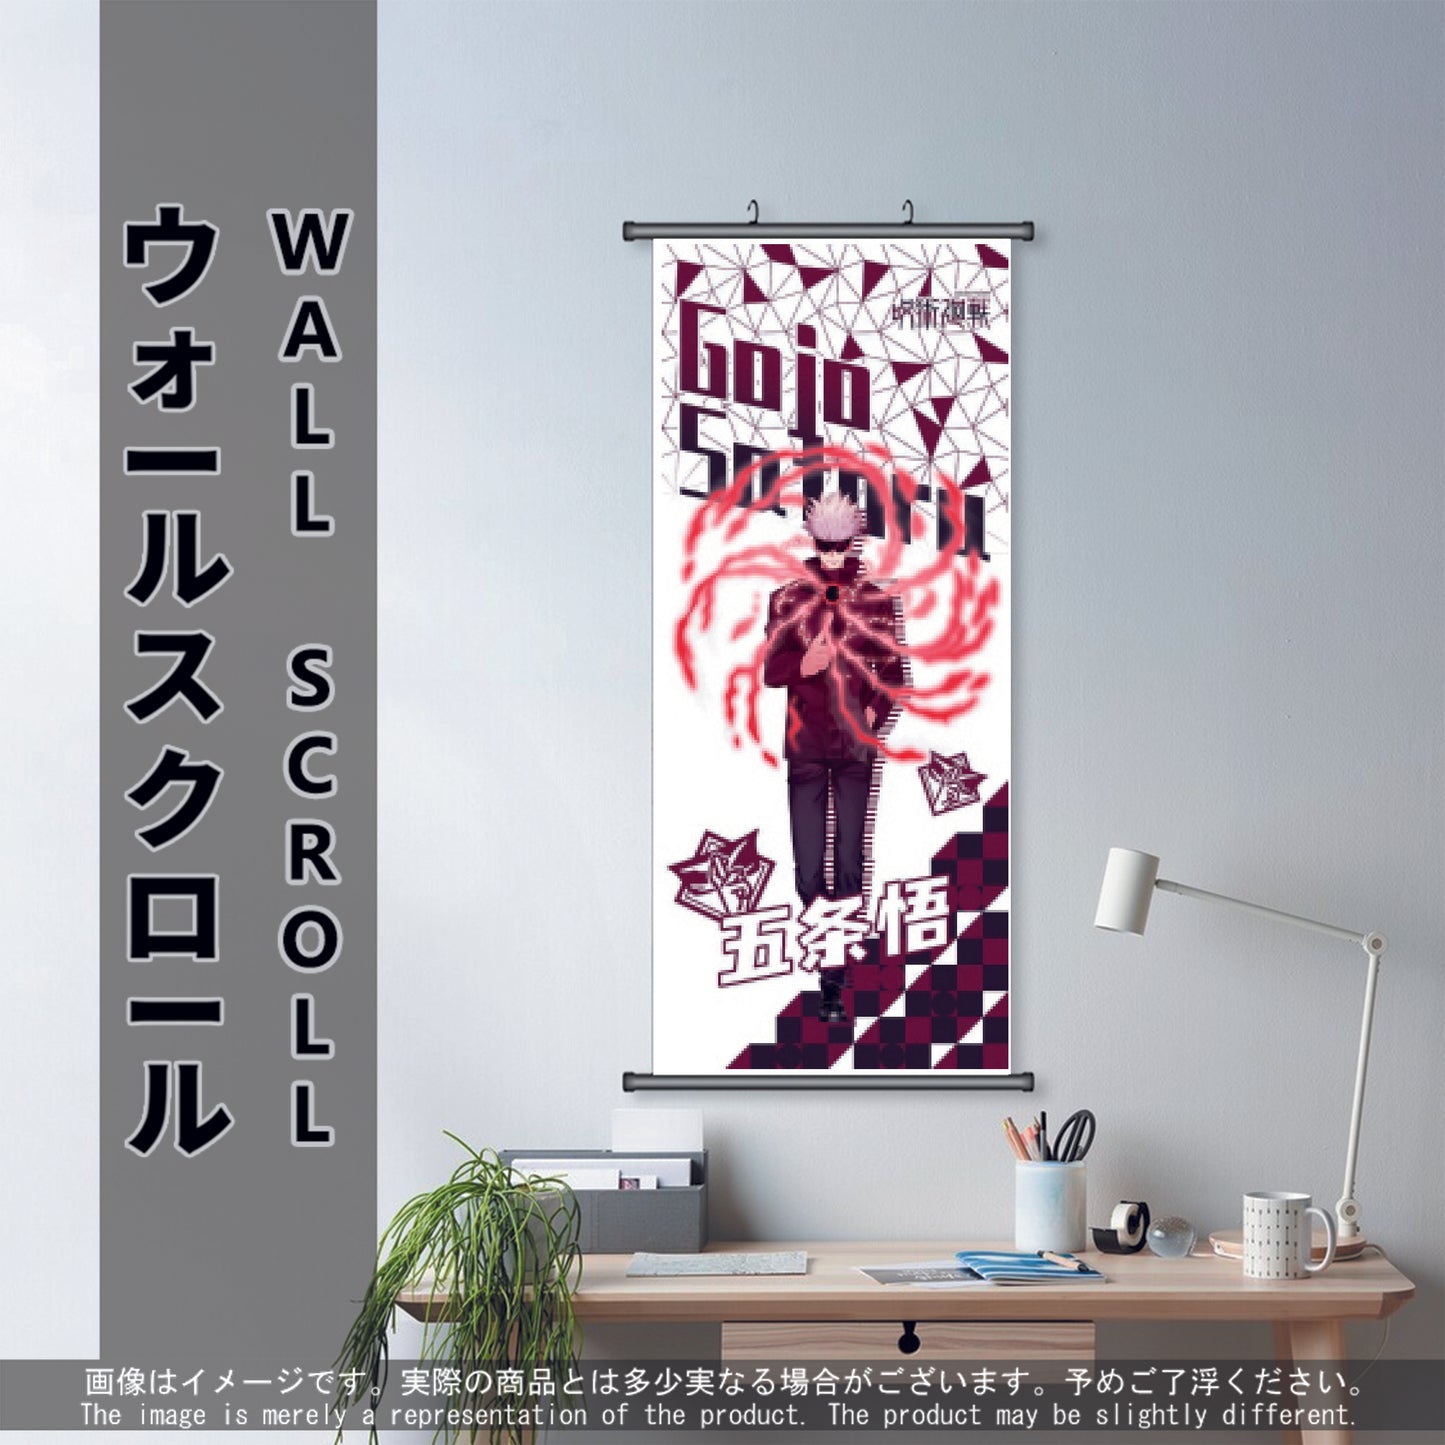 (Anime-JJT-06) GOJO Jujutsu Kaisen Anime Wall Scroll